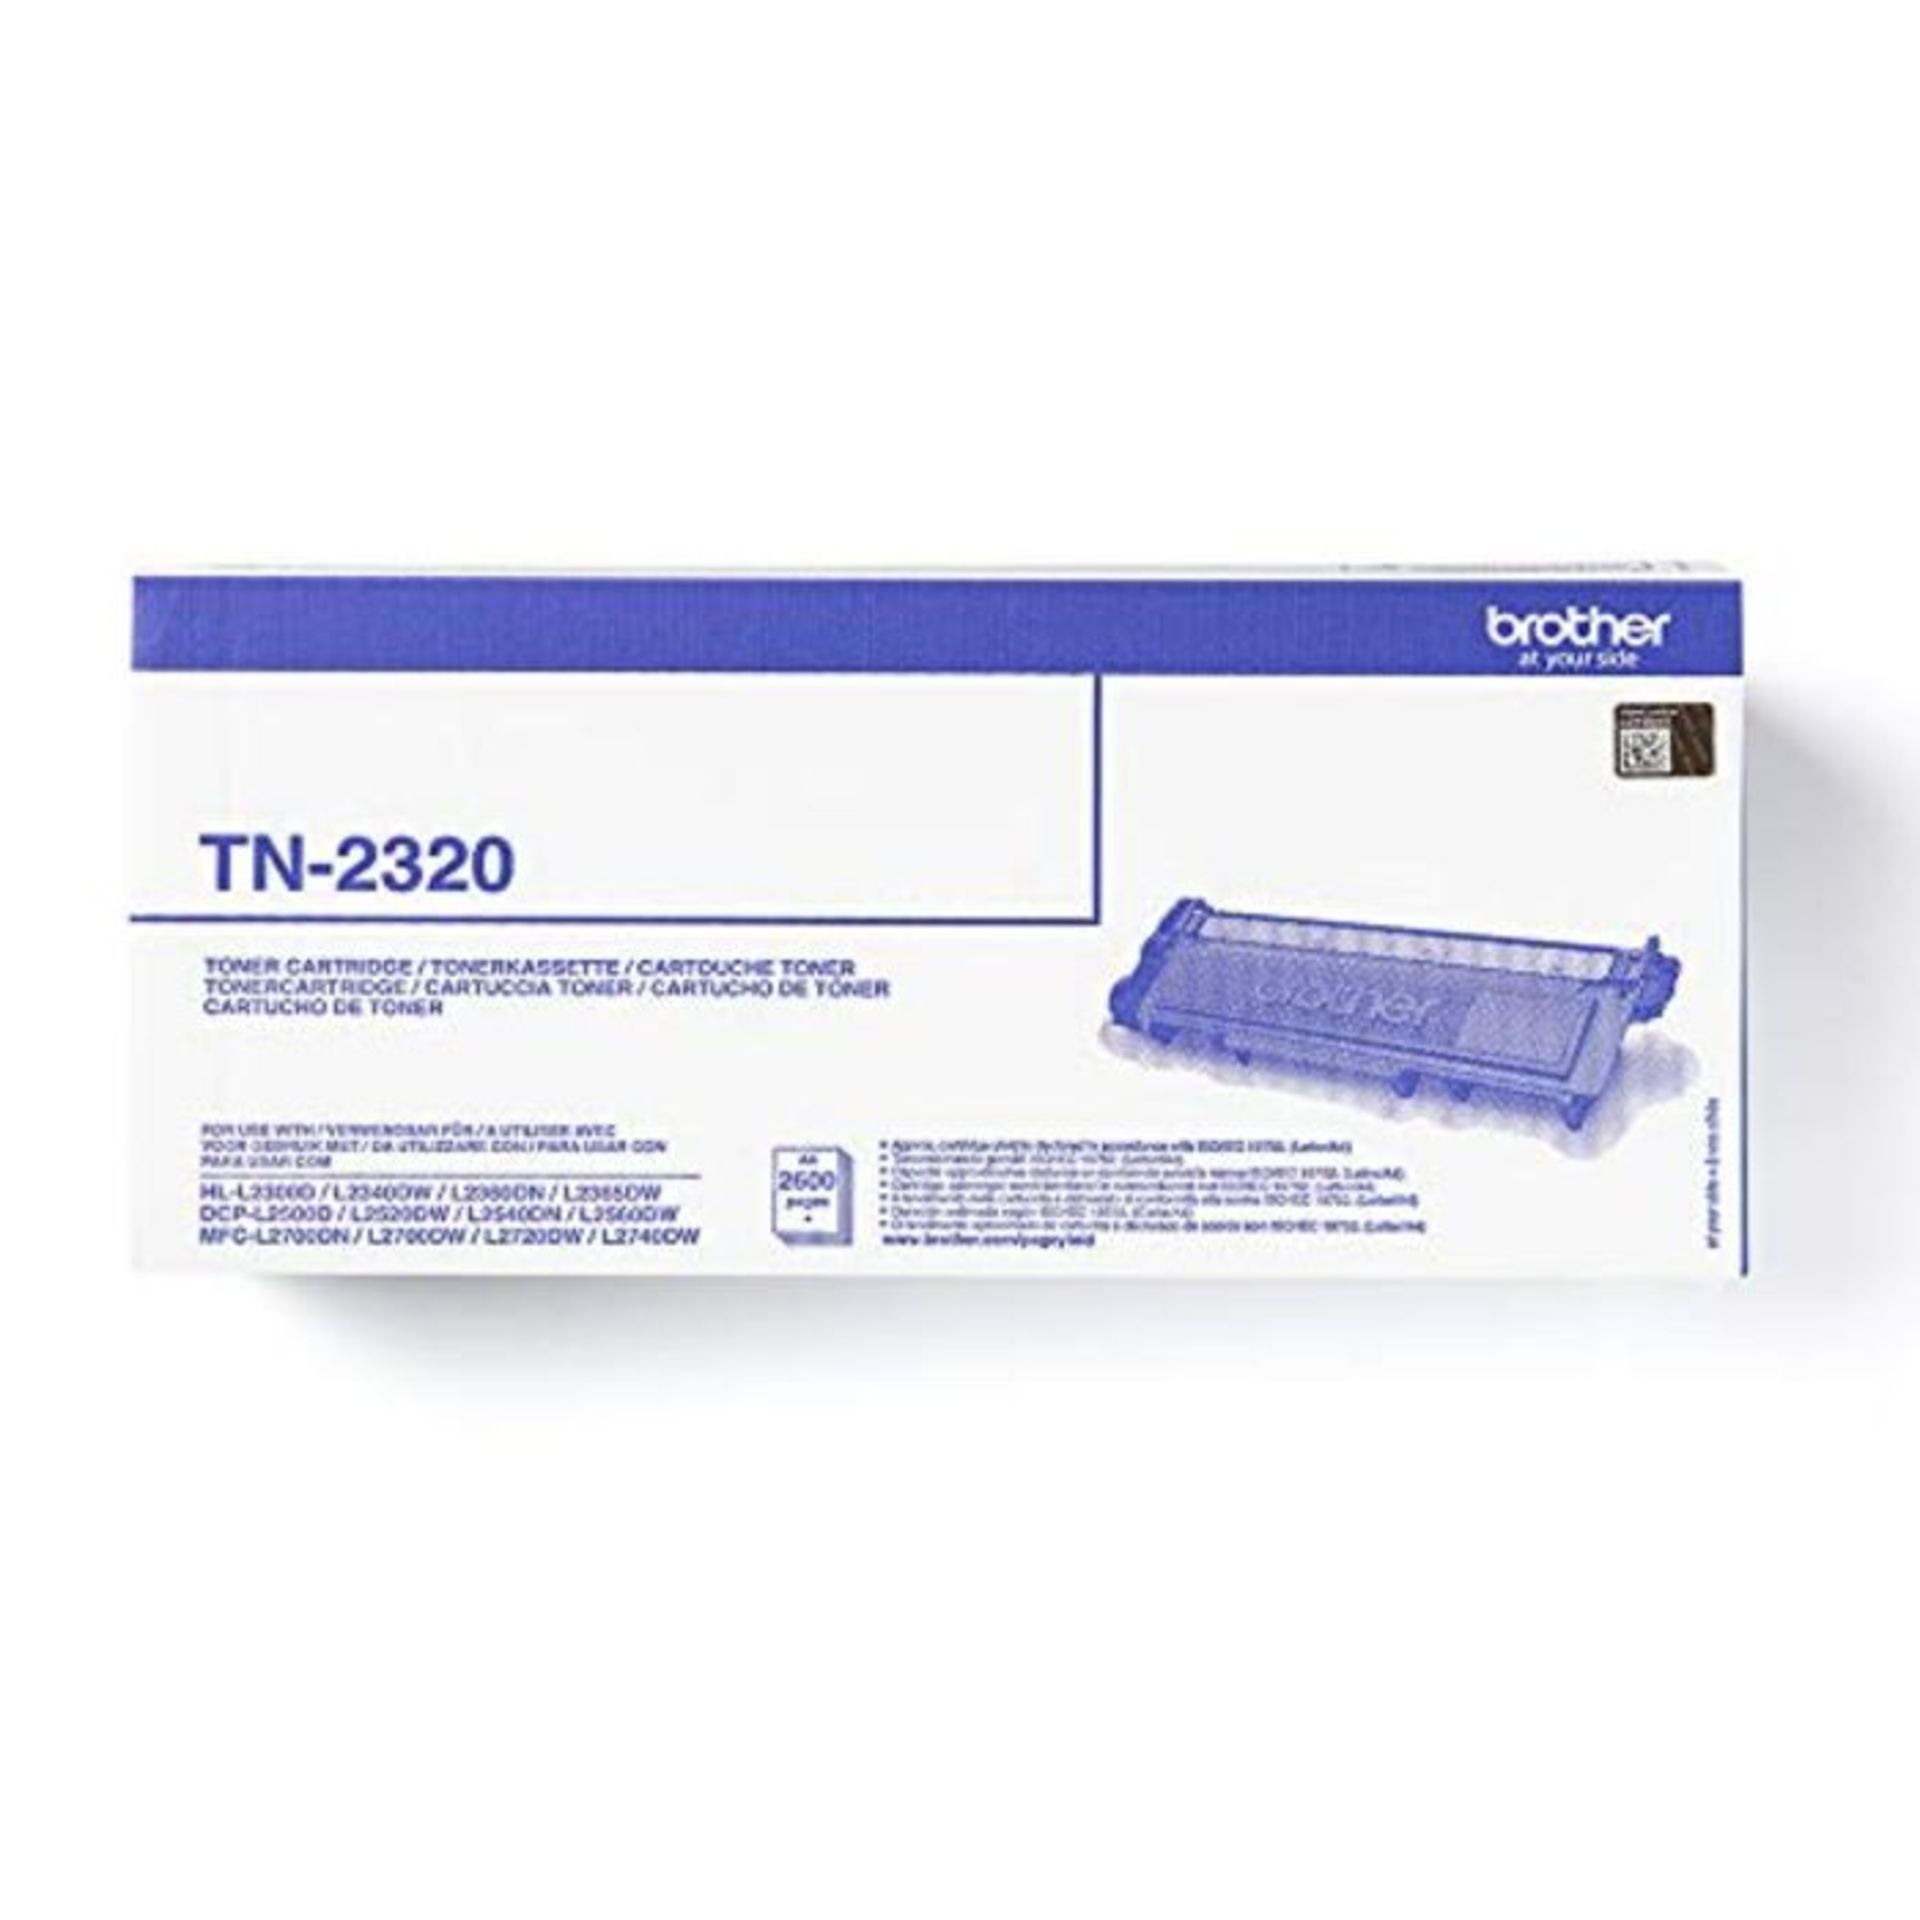 RRP £56.00 Brother TN-2320 Toner Cartridge, Black, Single Pack, High Yield, Includes 1 x Toner Ca